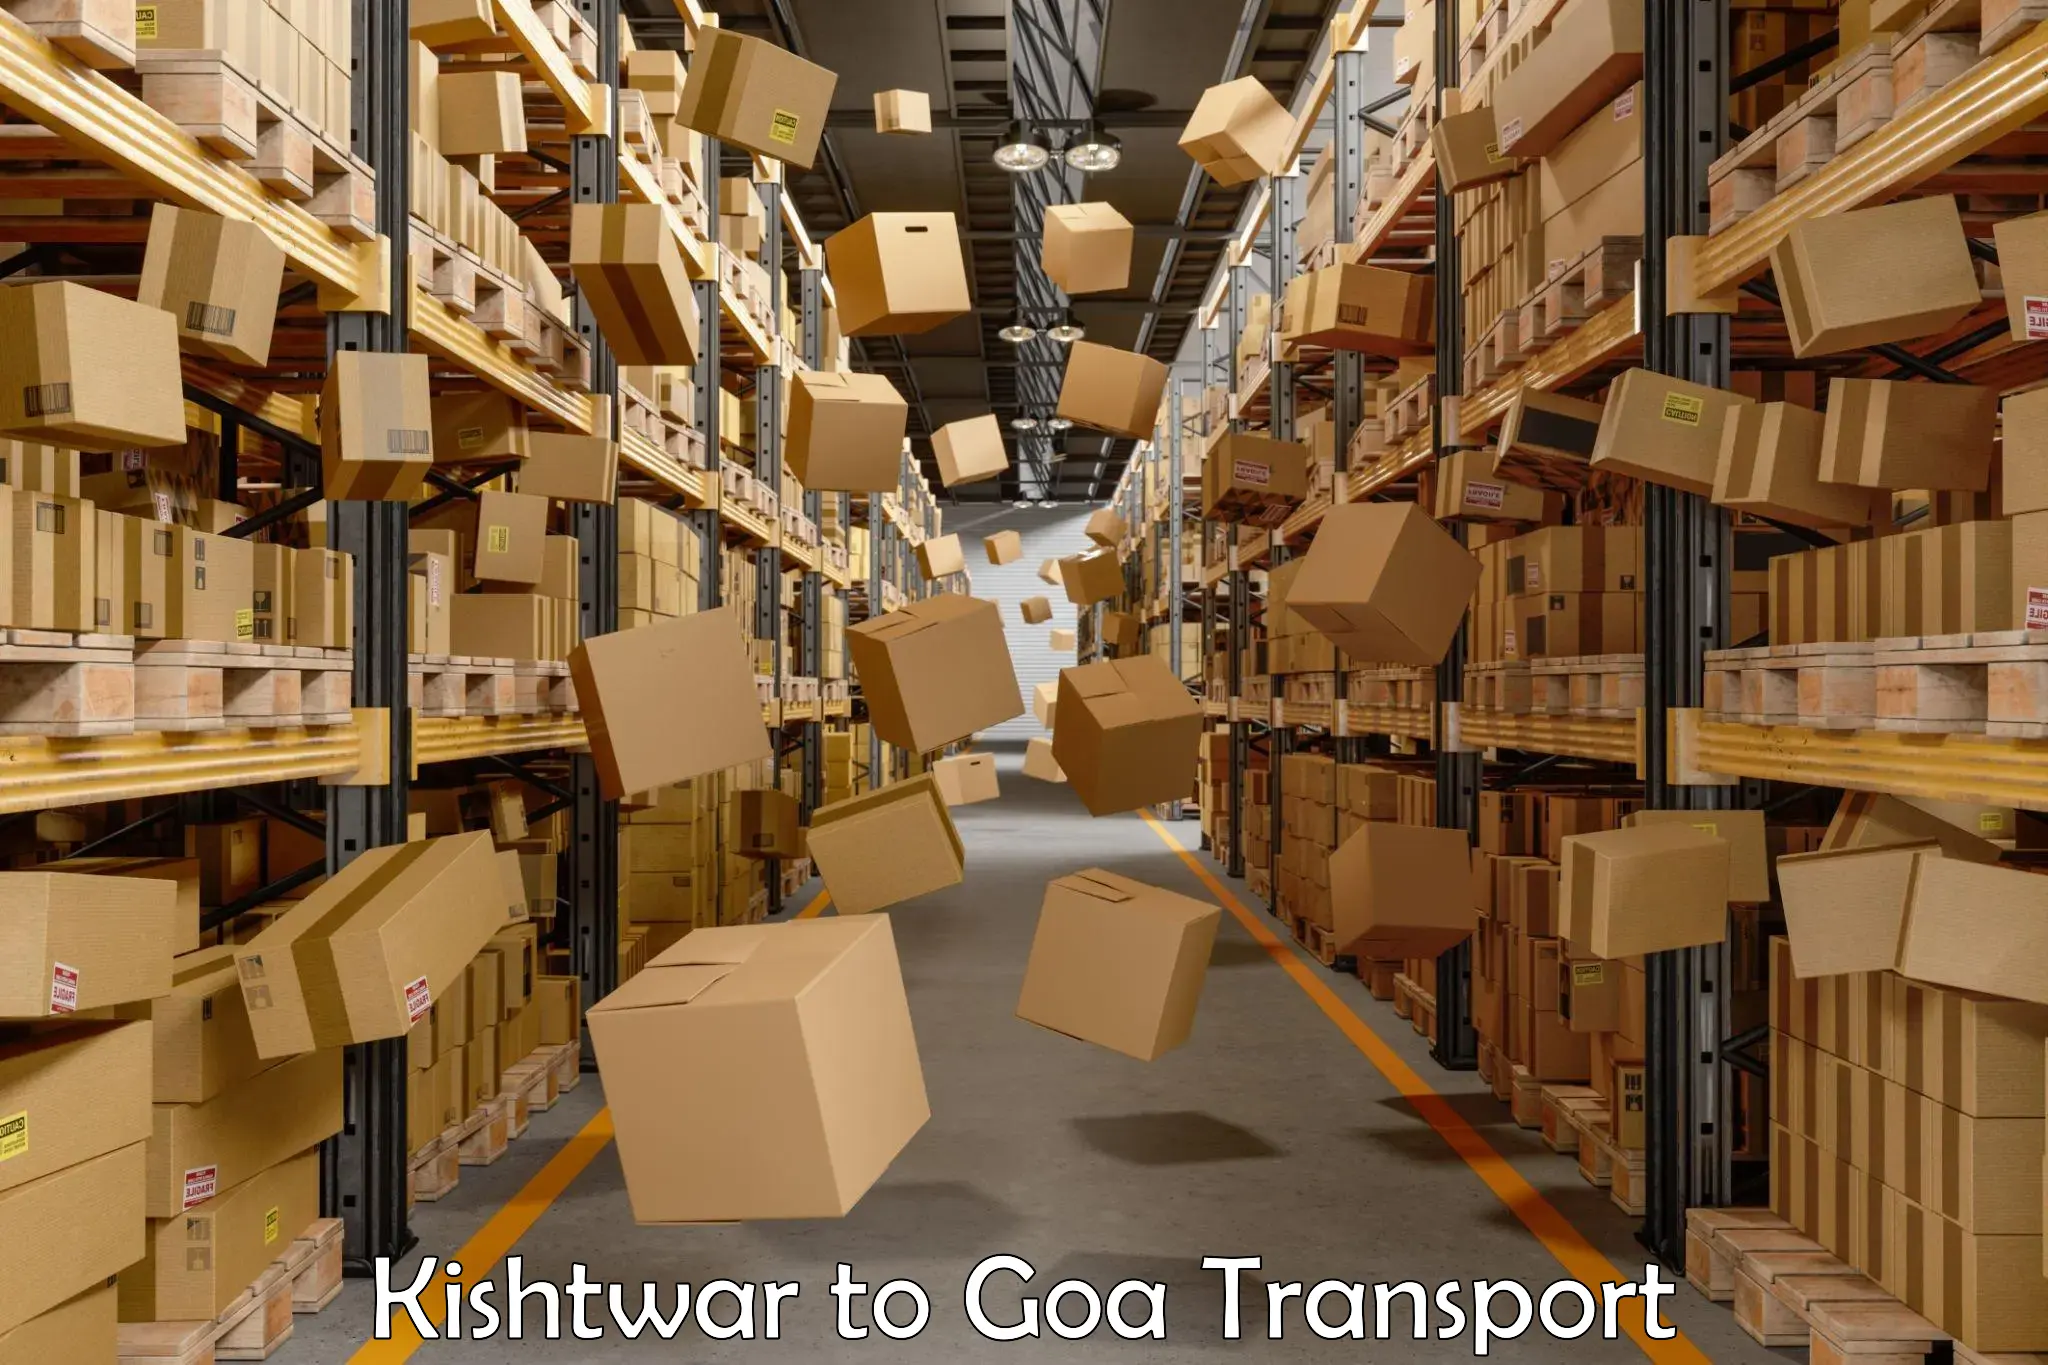 Daily transport service Kishtwar to Bicholim